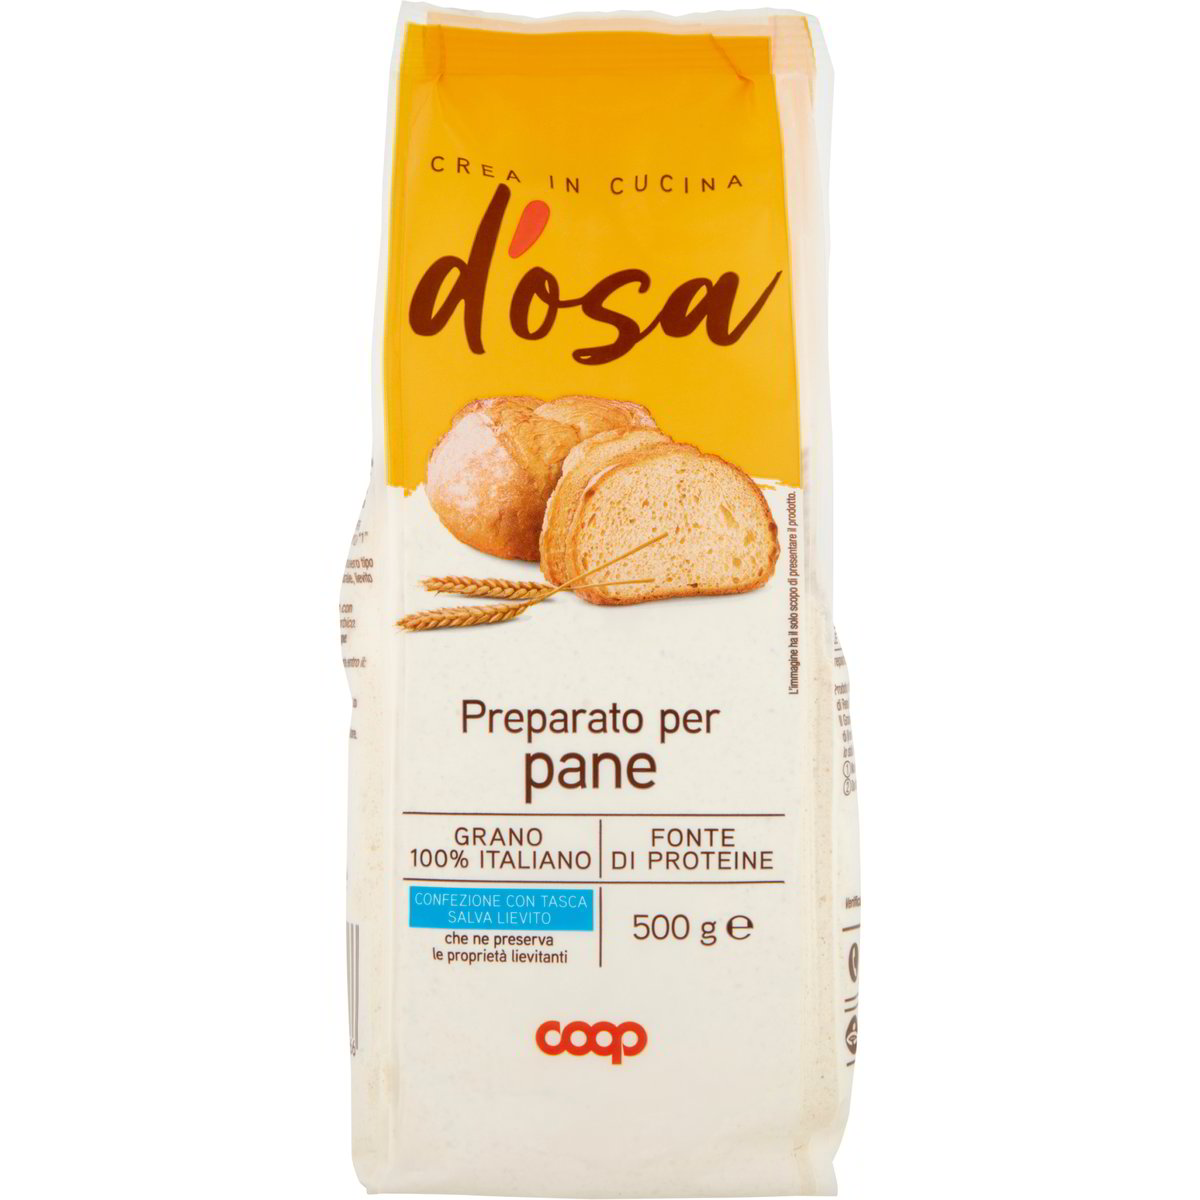 Preparato per pane COOP - D'OSA 500 G - Coop Shop